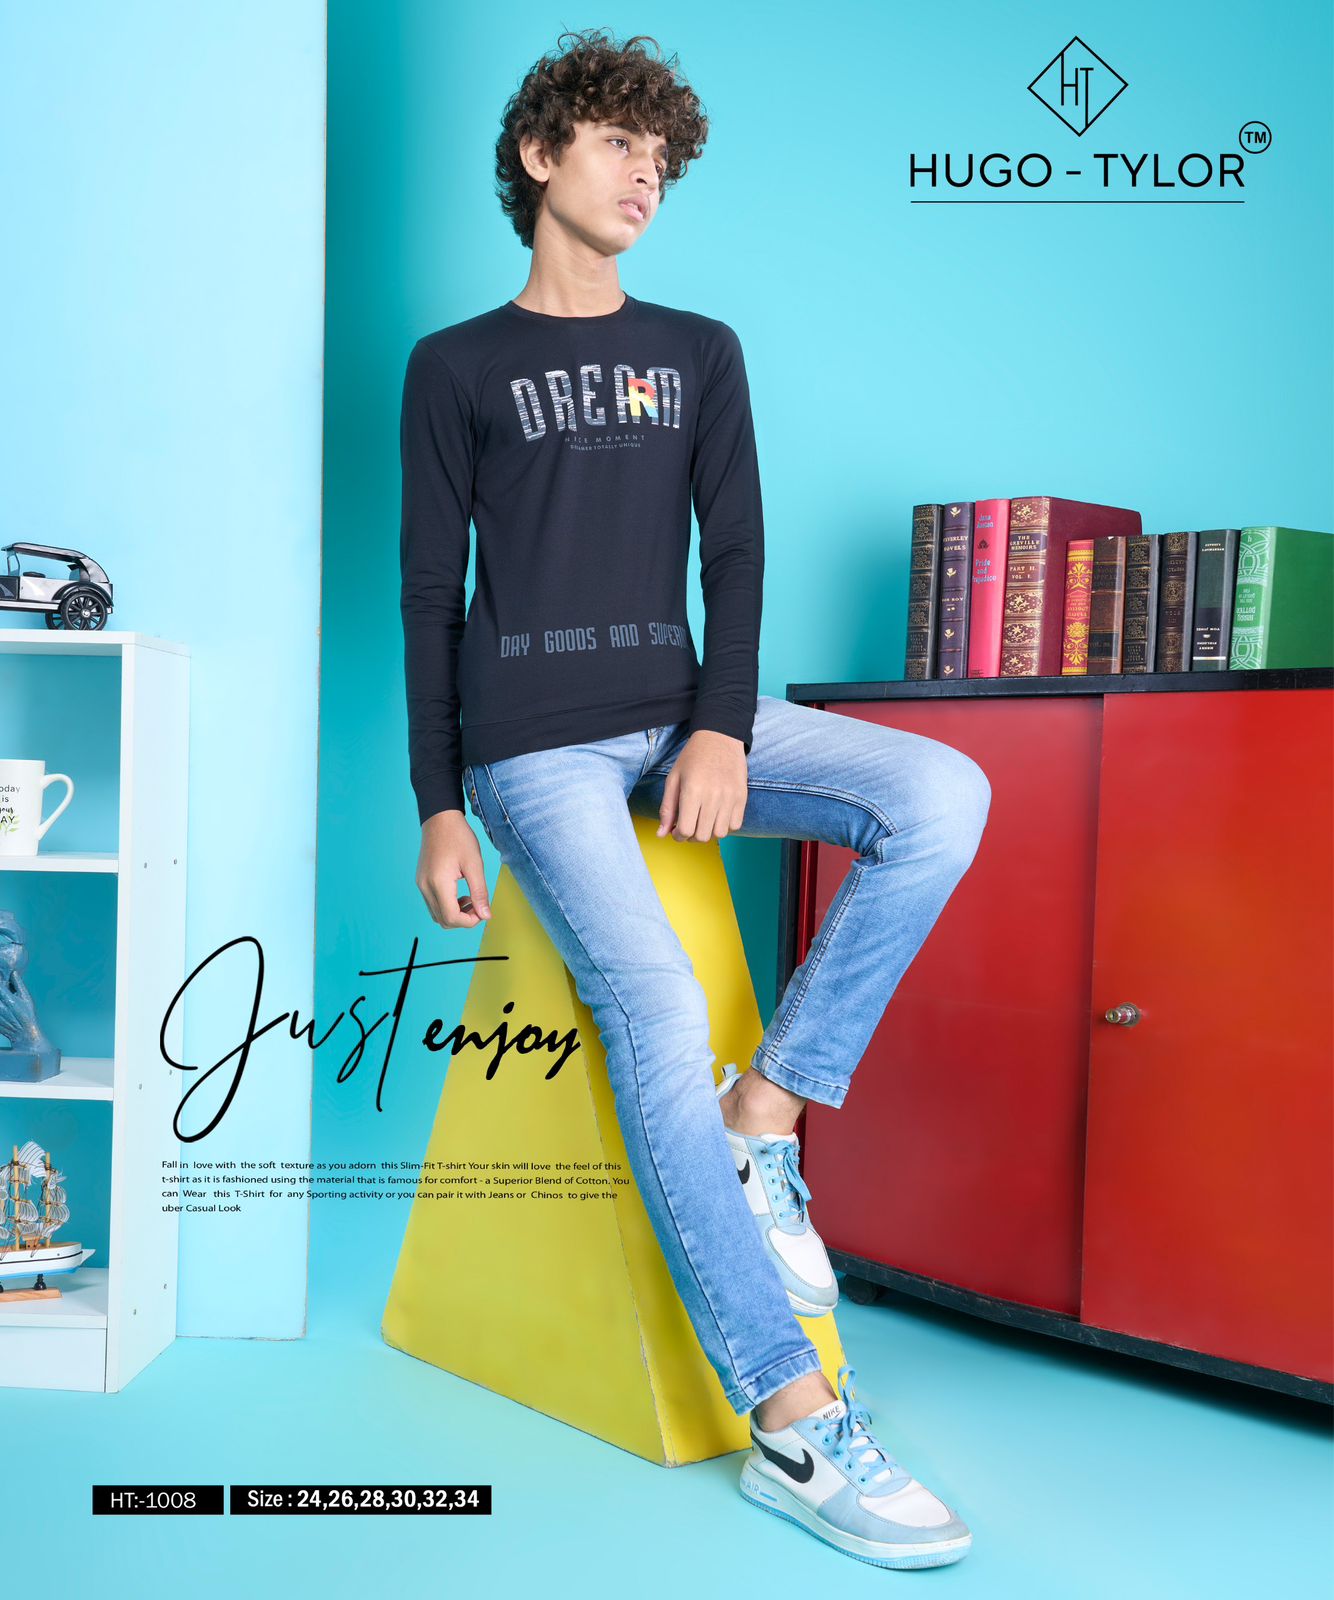 1008 Hugo Tylor Imported Boys Tshirt